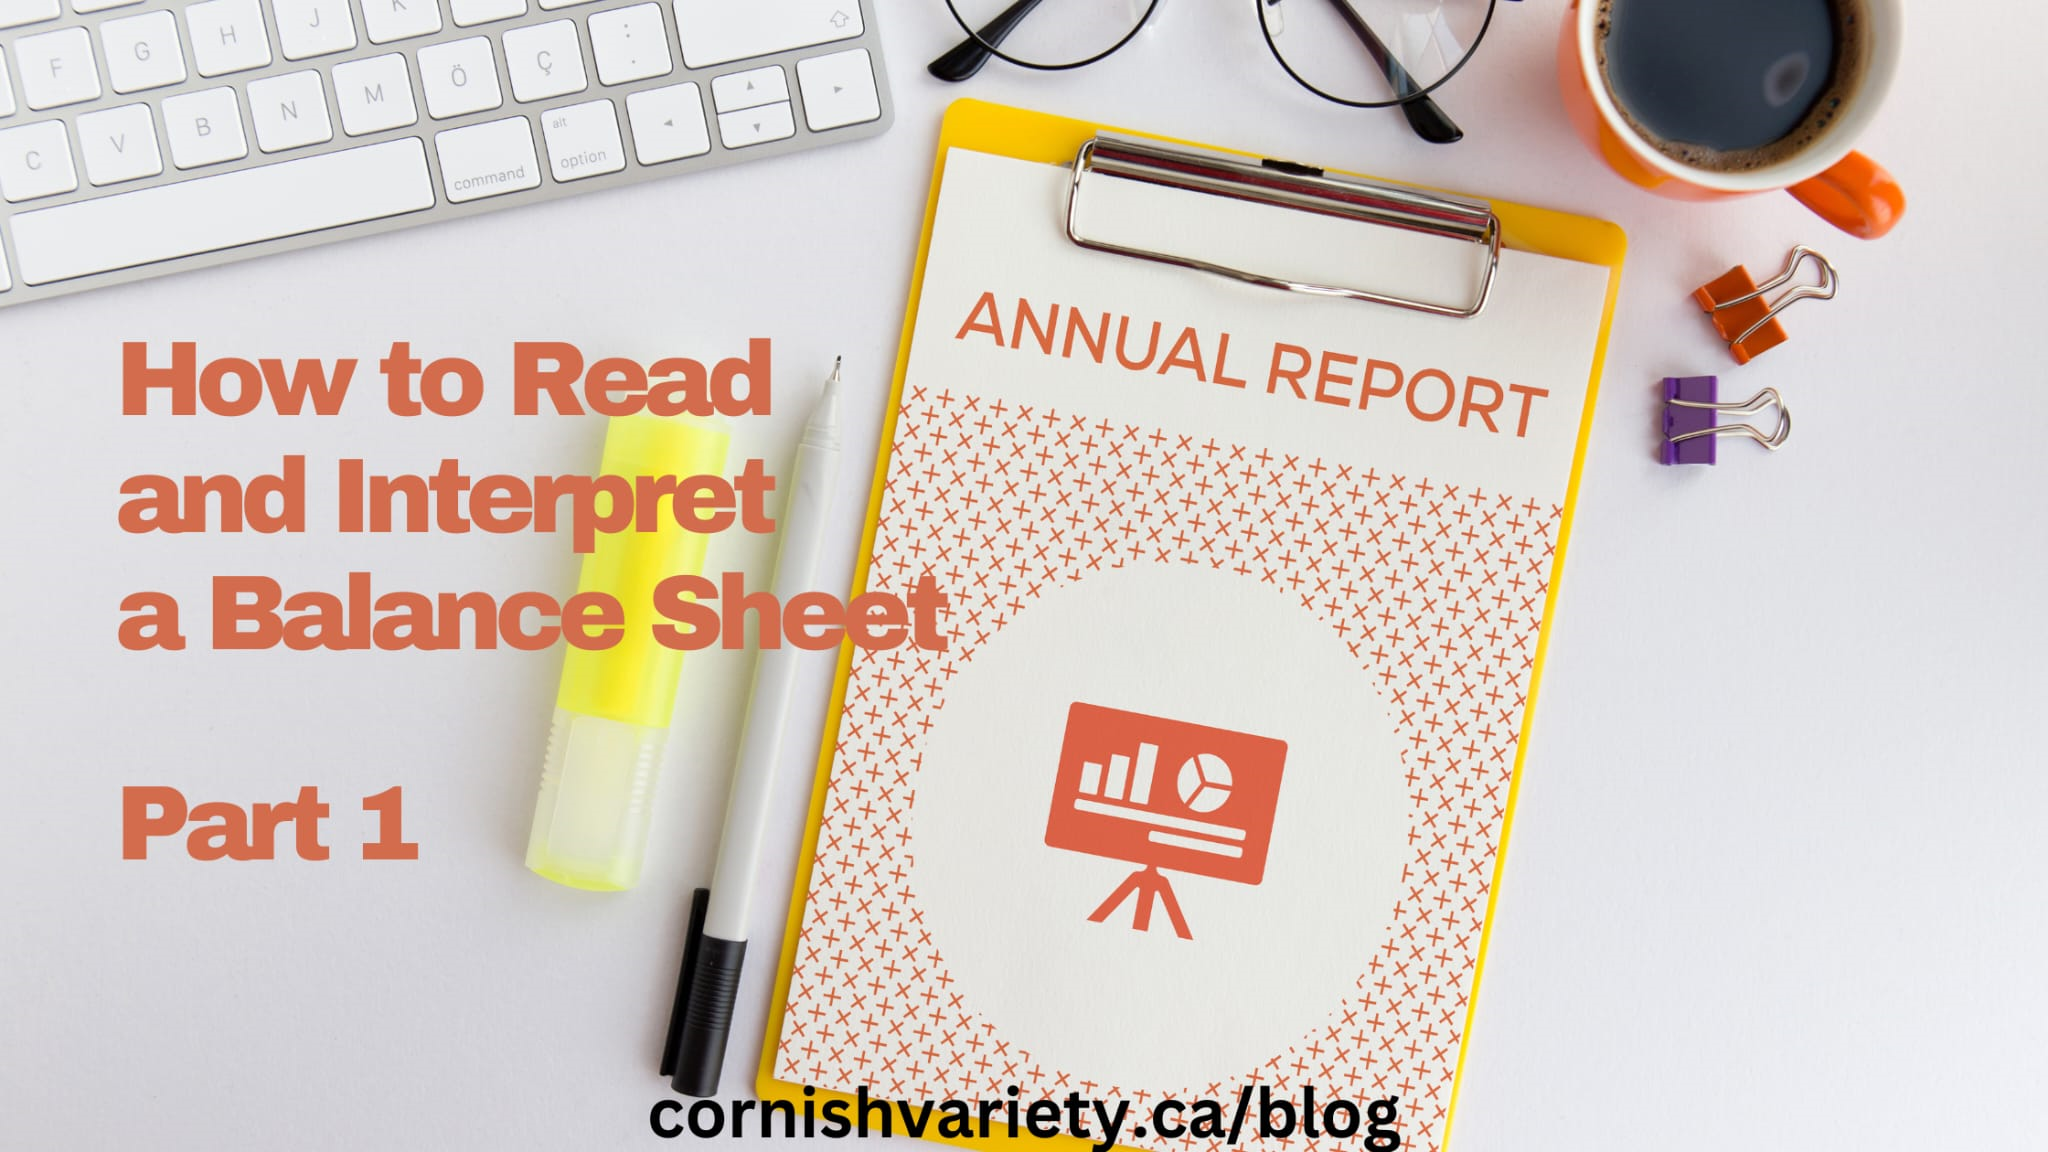 How to Read and Interpret a Balance Sheet  – Part 1